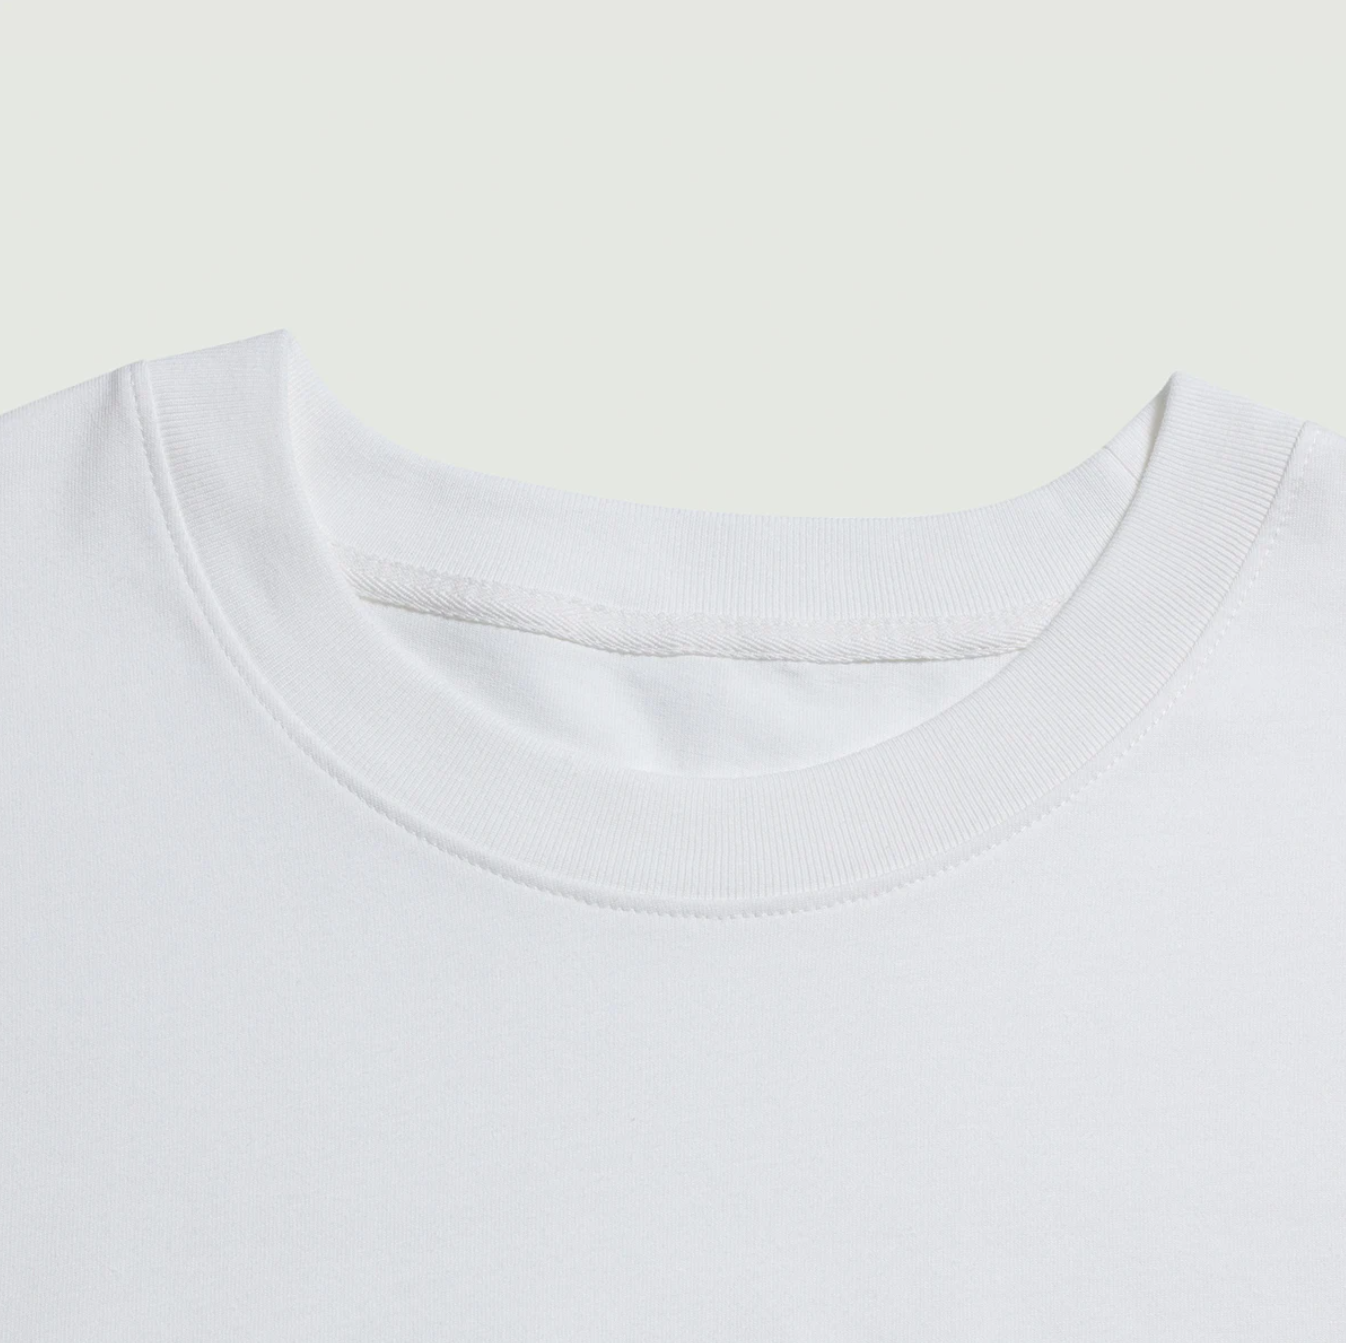 SOLD MY SOUL TO TECHNO (BACK PRINT) - Unisex Oversized T-shirt